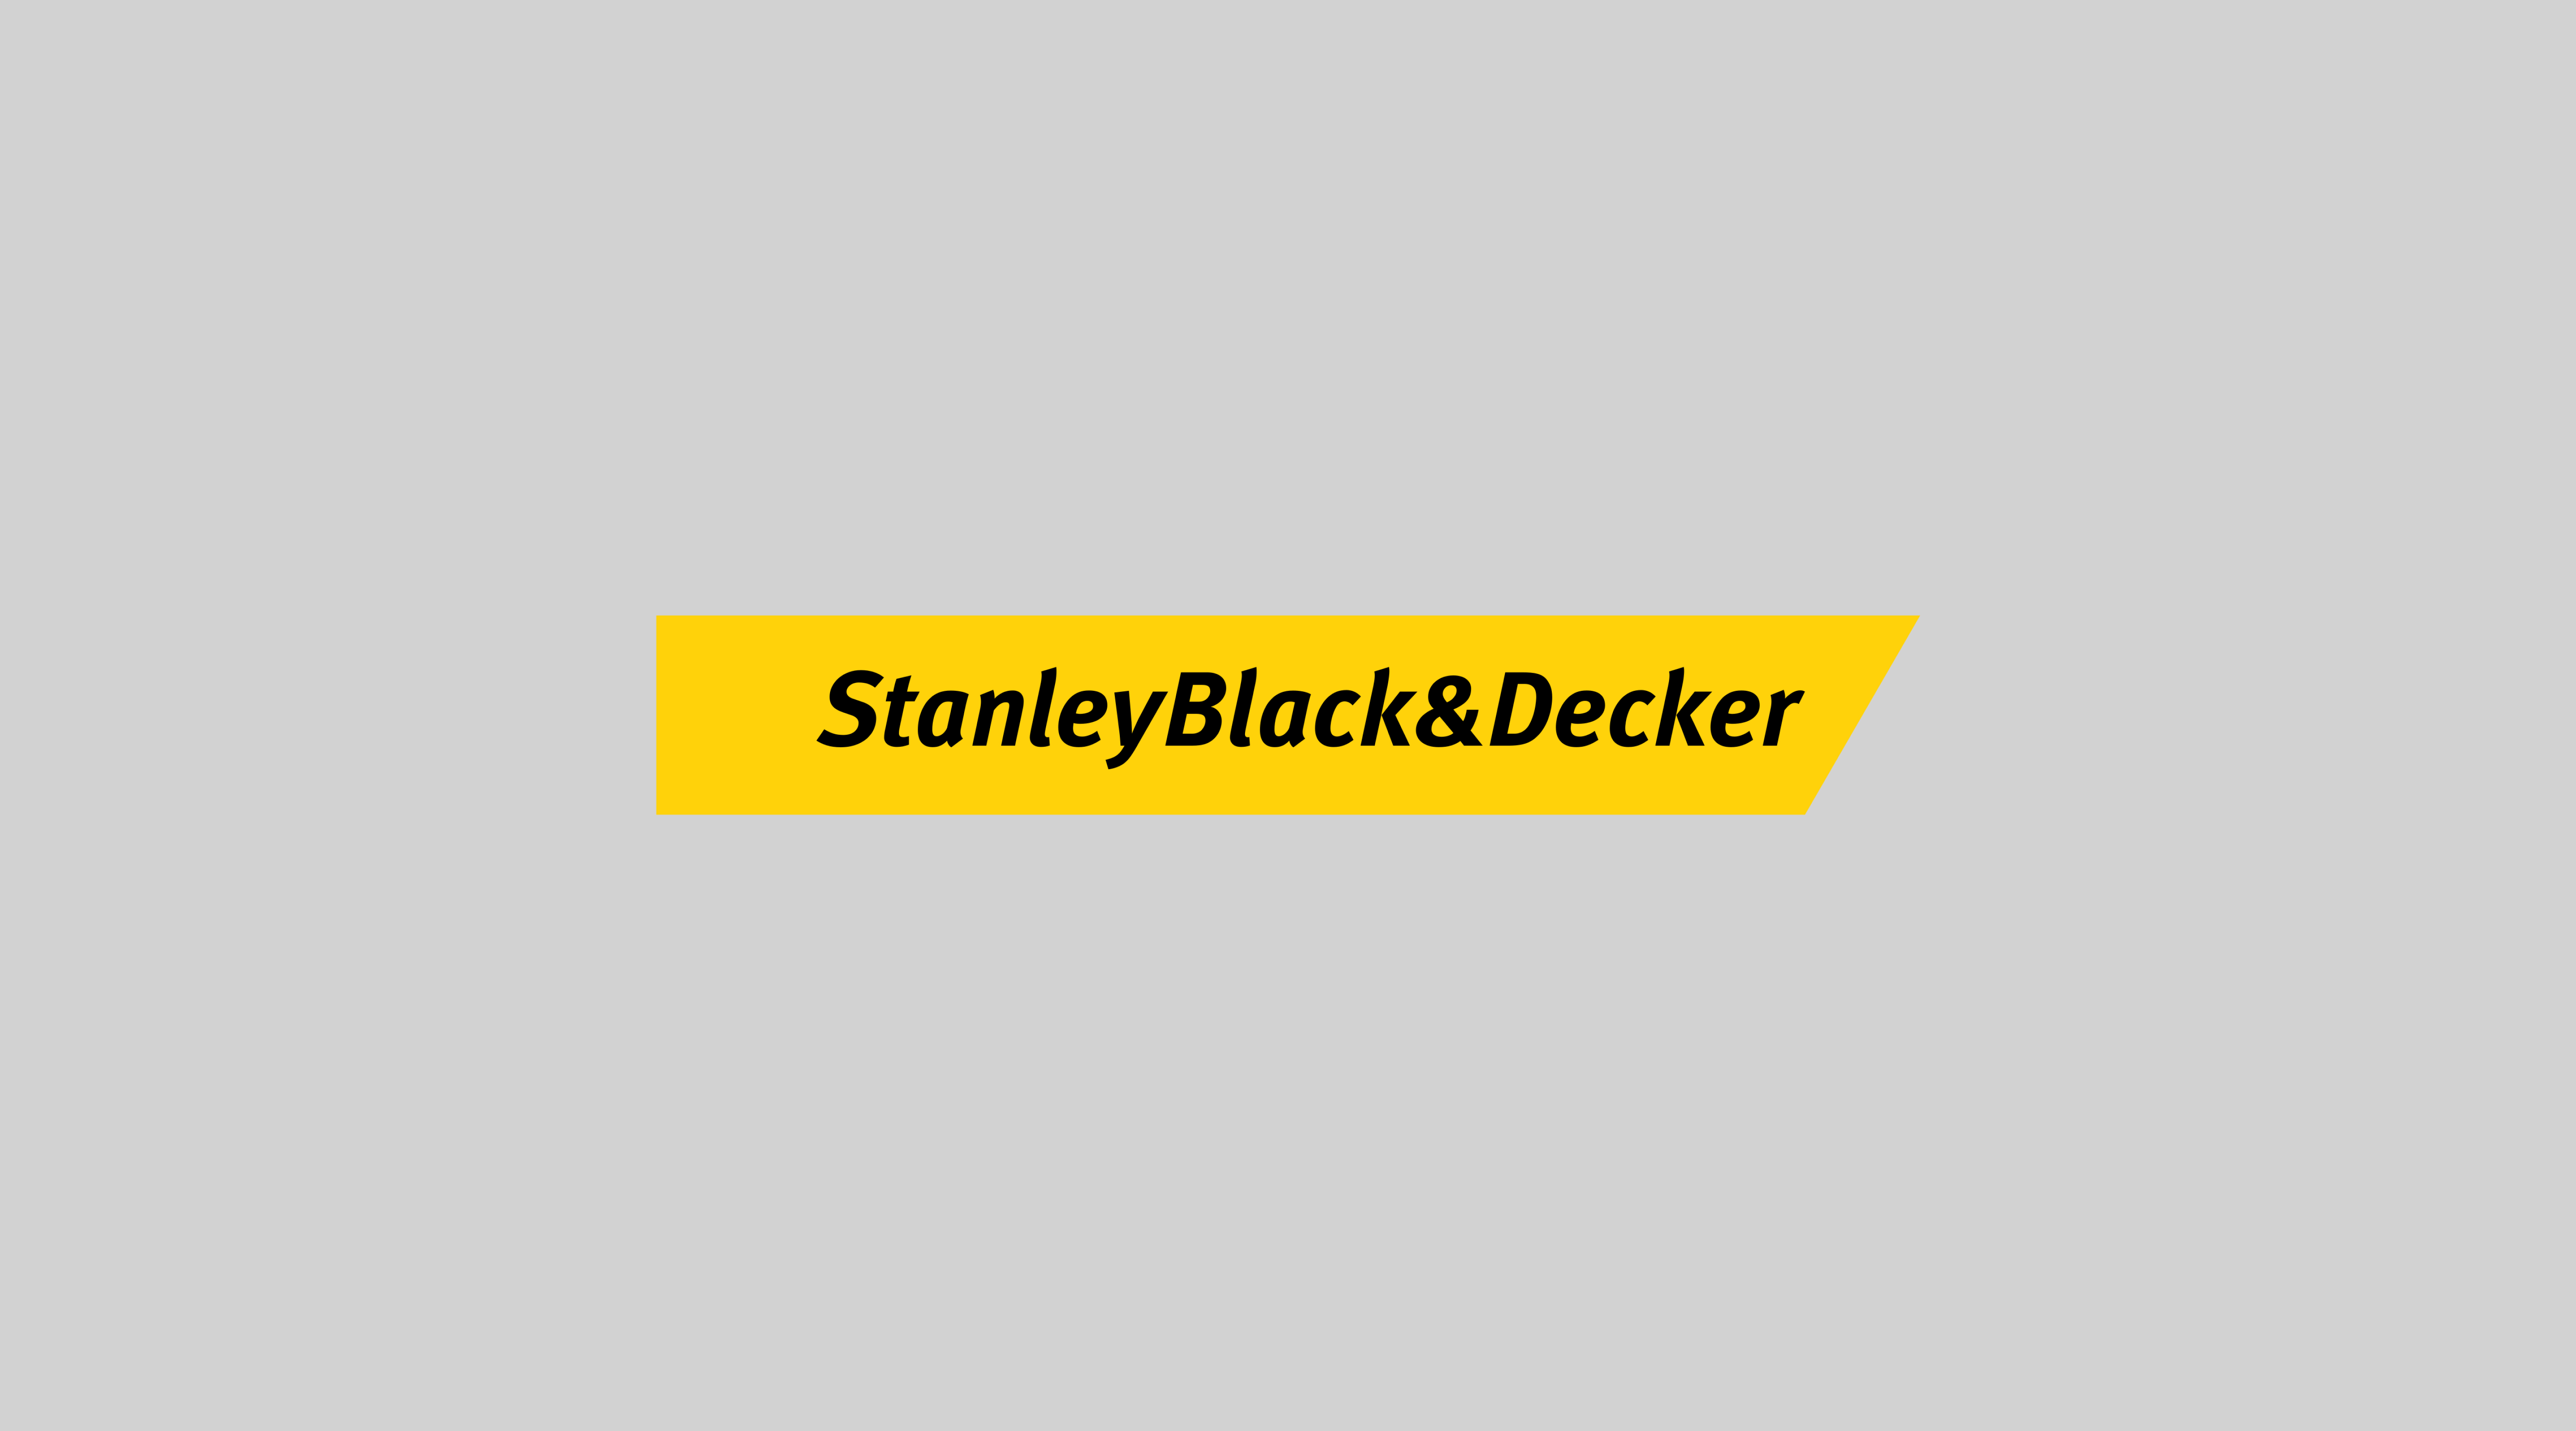 Stanley Black and Decker logo on neutral background